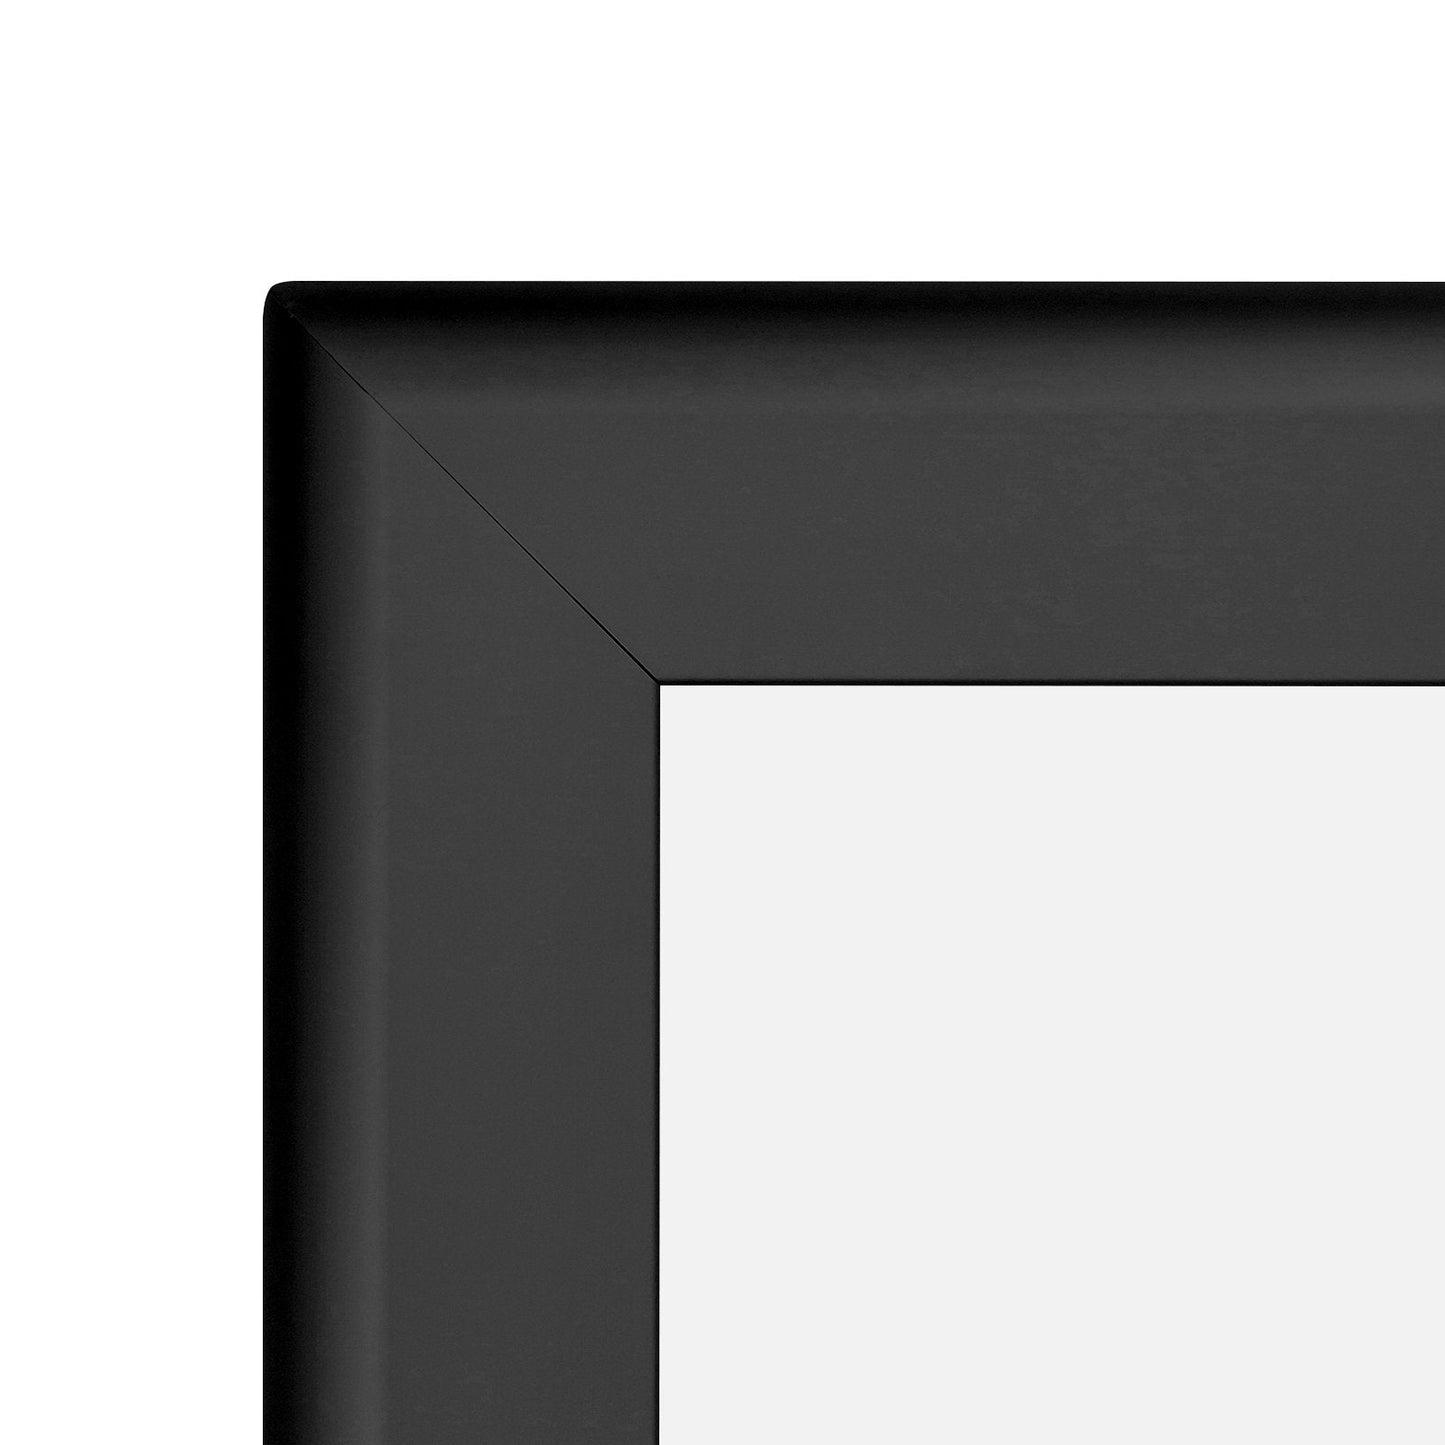 36x47 Black SnapeZo® Snap Frame - 1.7" Profile - Snap Frames Direct